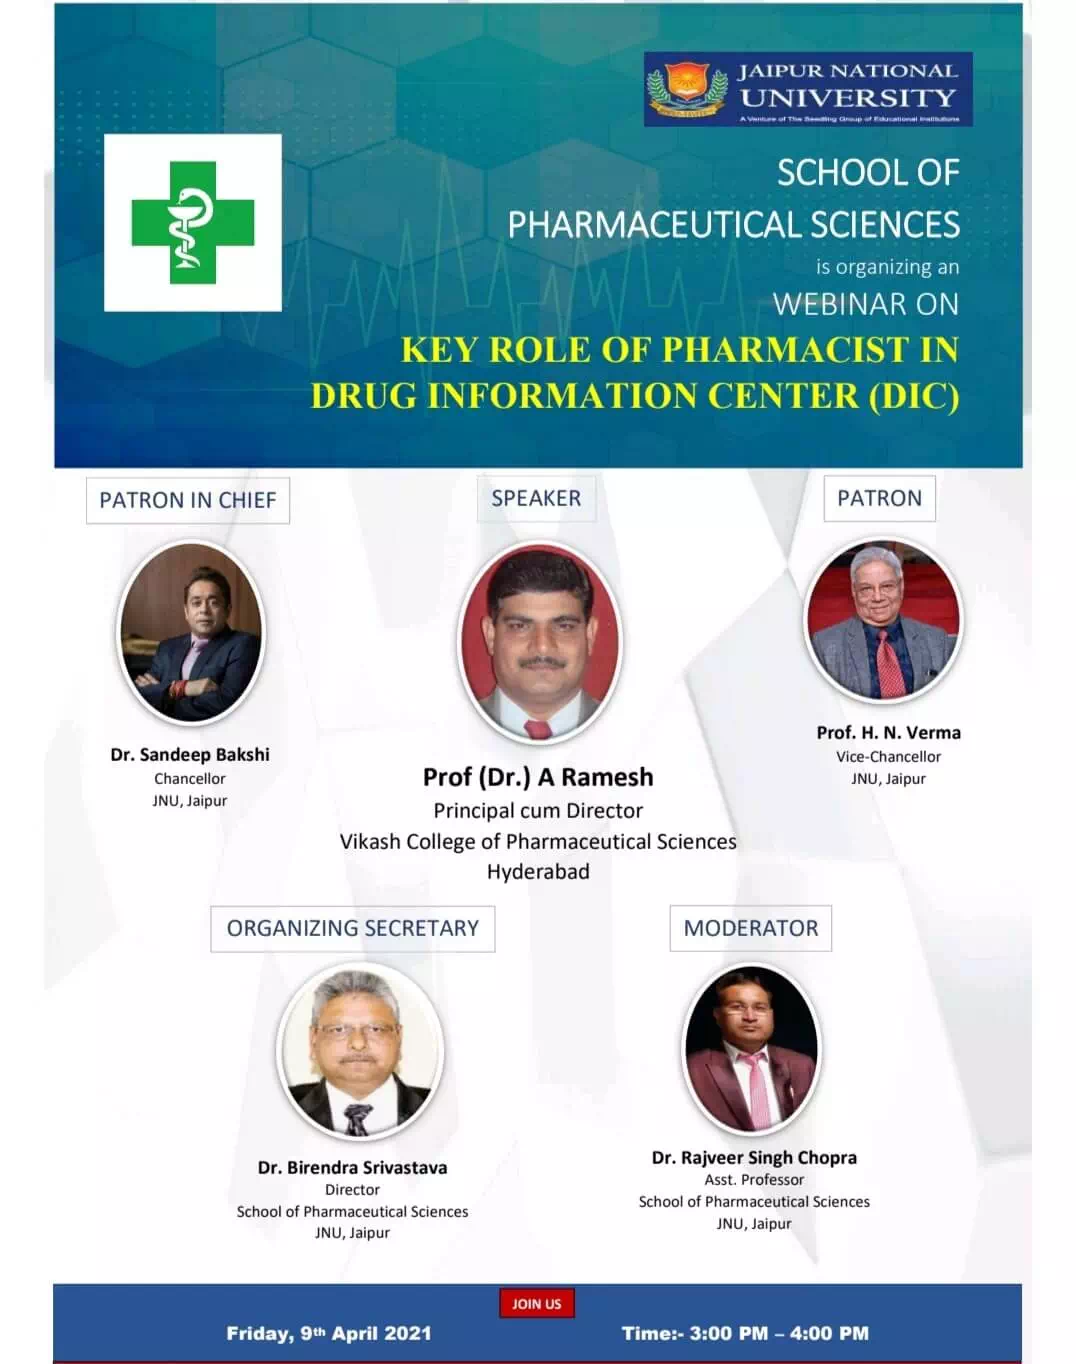 Webinar on “Key Role of Pharmacist in Drug Information Center (DIC)”